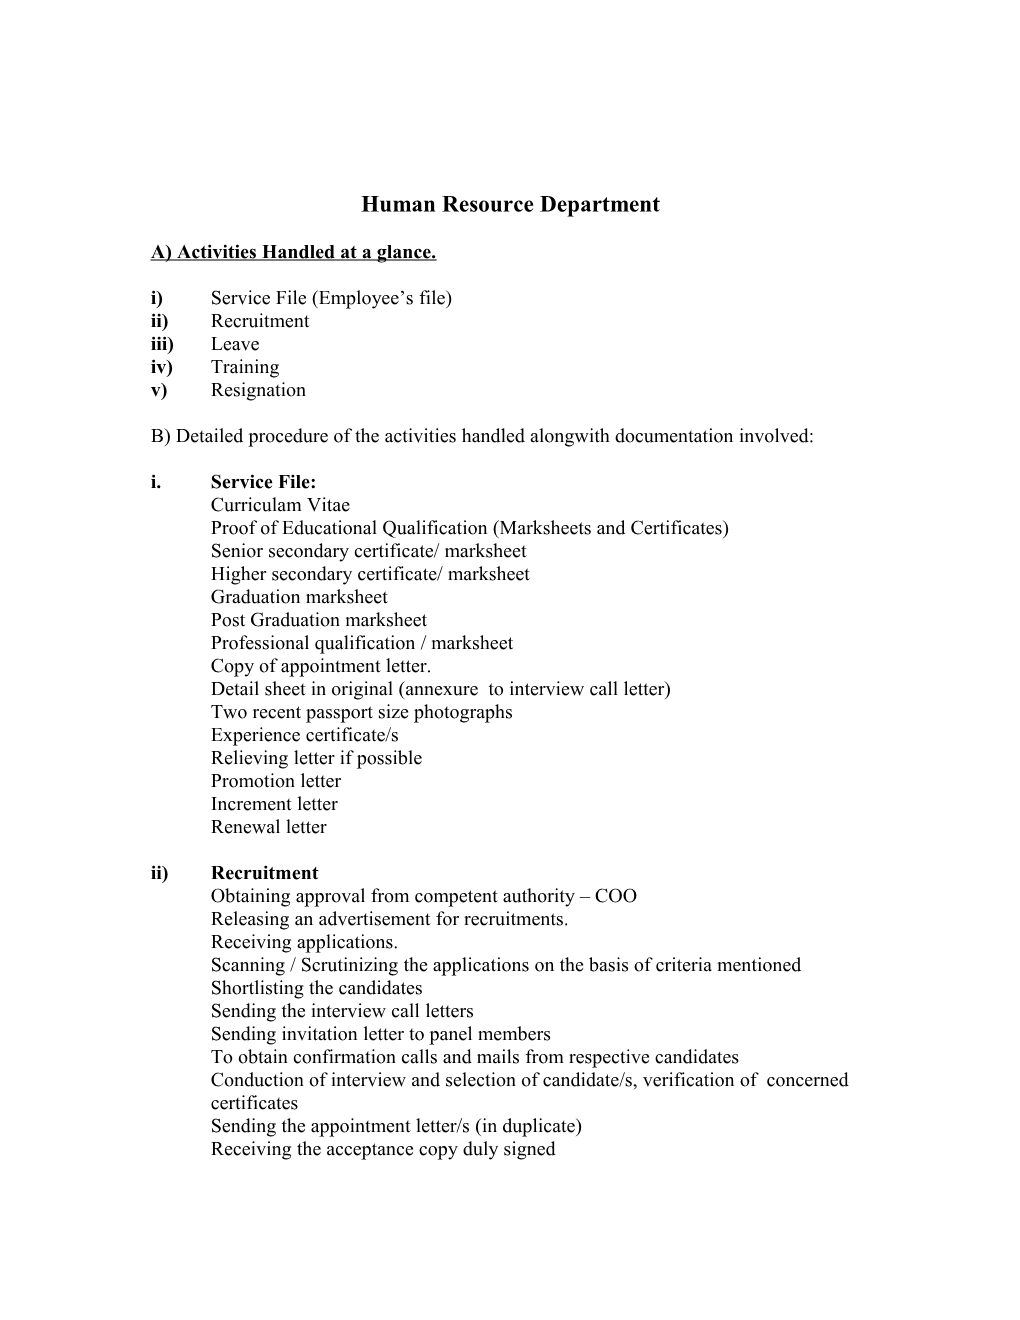 Human Resource ISO 9001